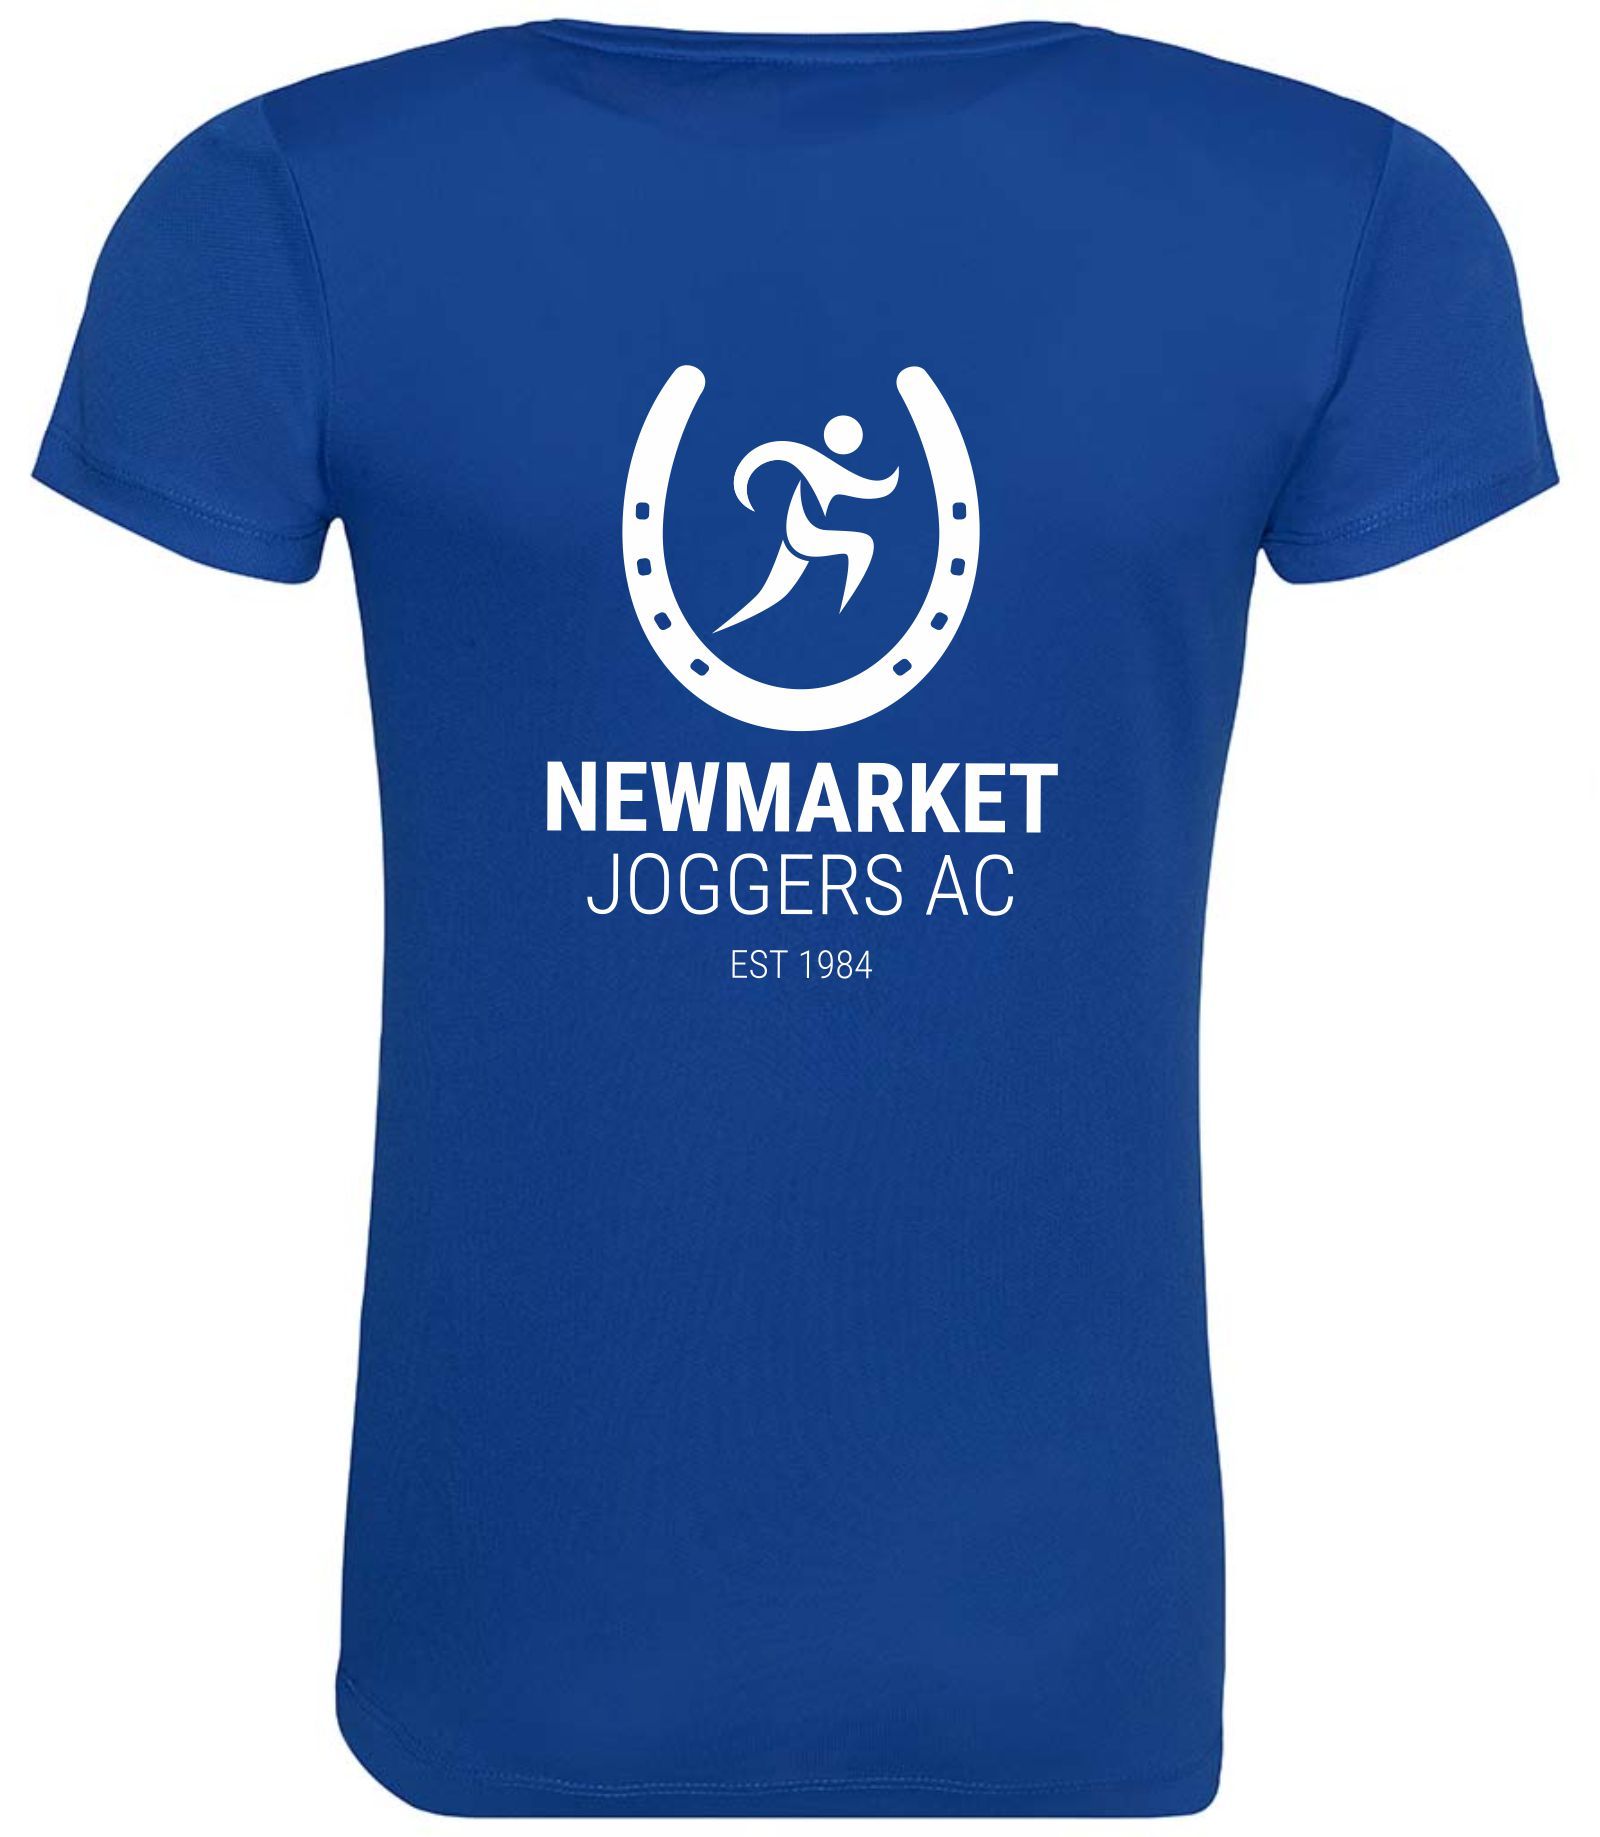 Newmarket Joggers – Performance Tee (Ladies)